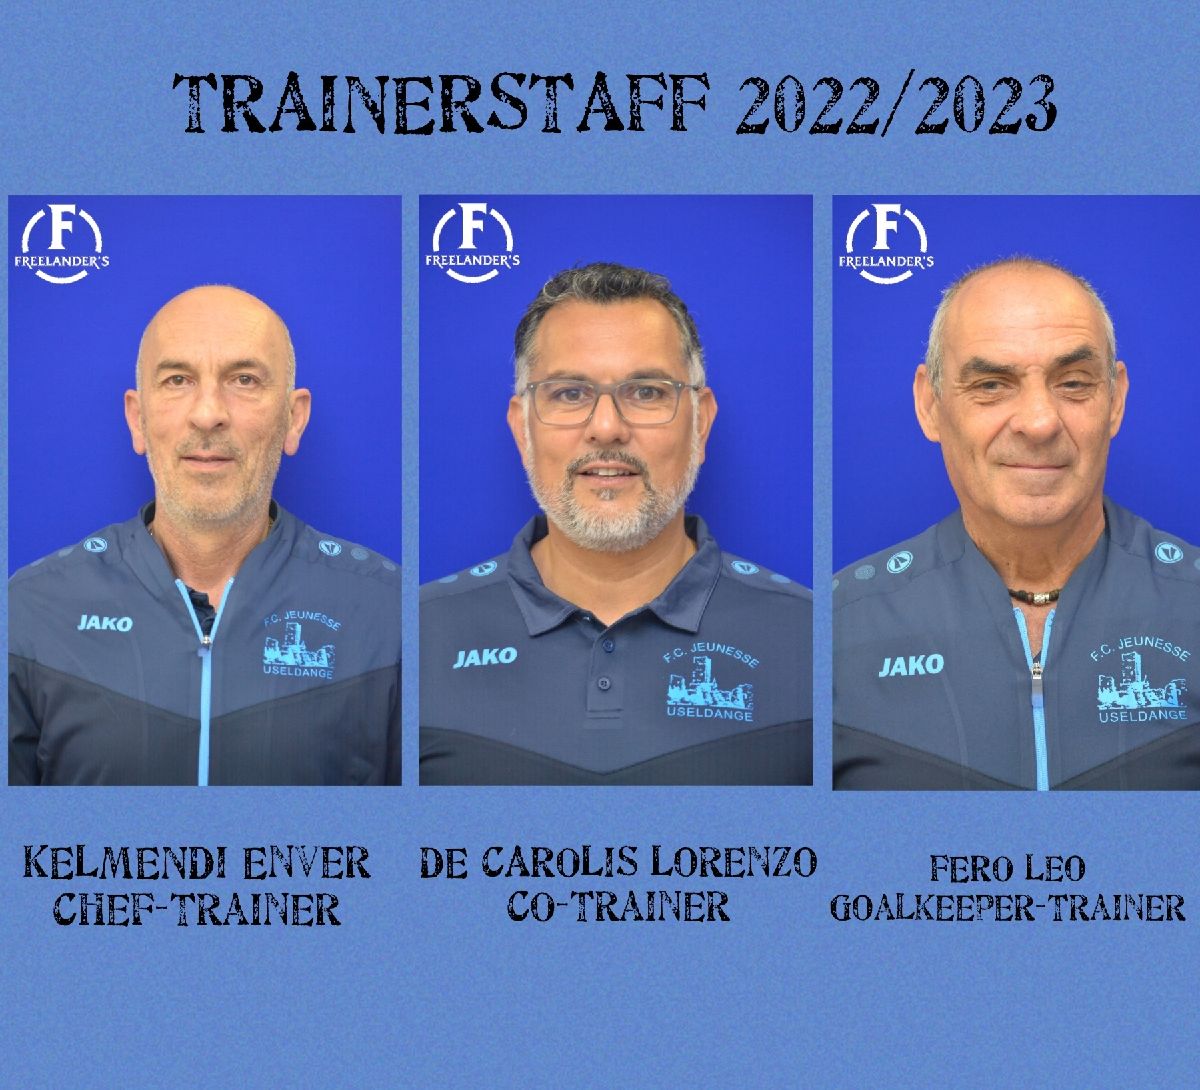 Trainerstaff 2022/2023